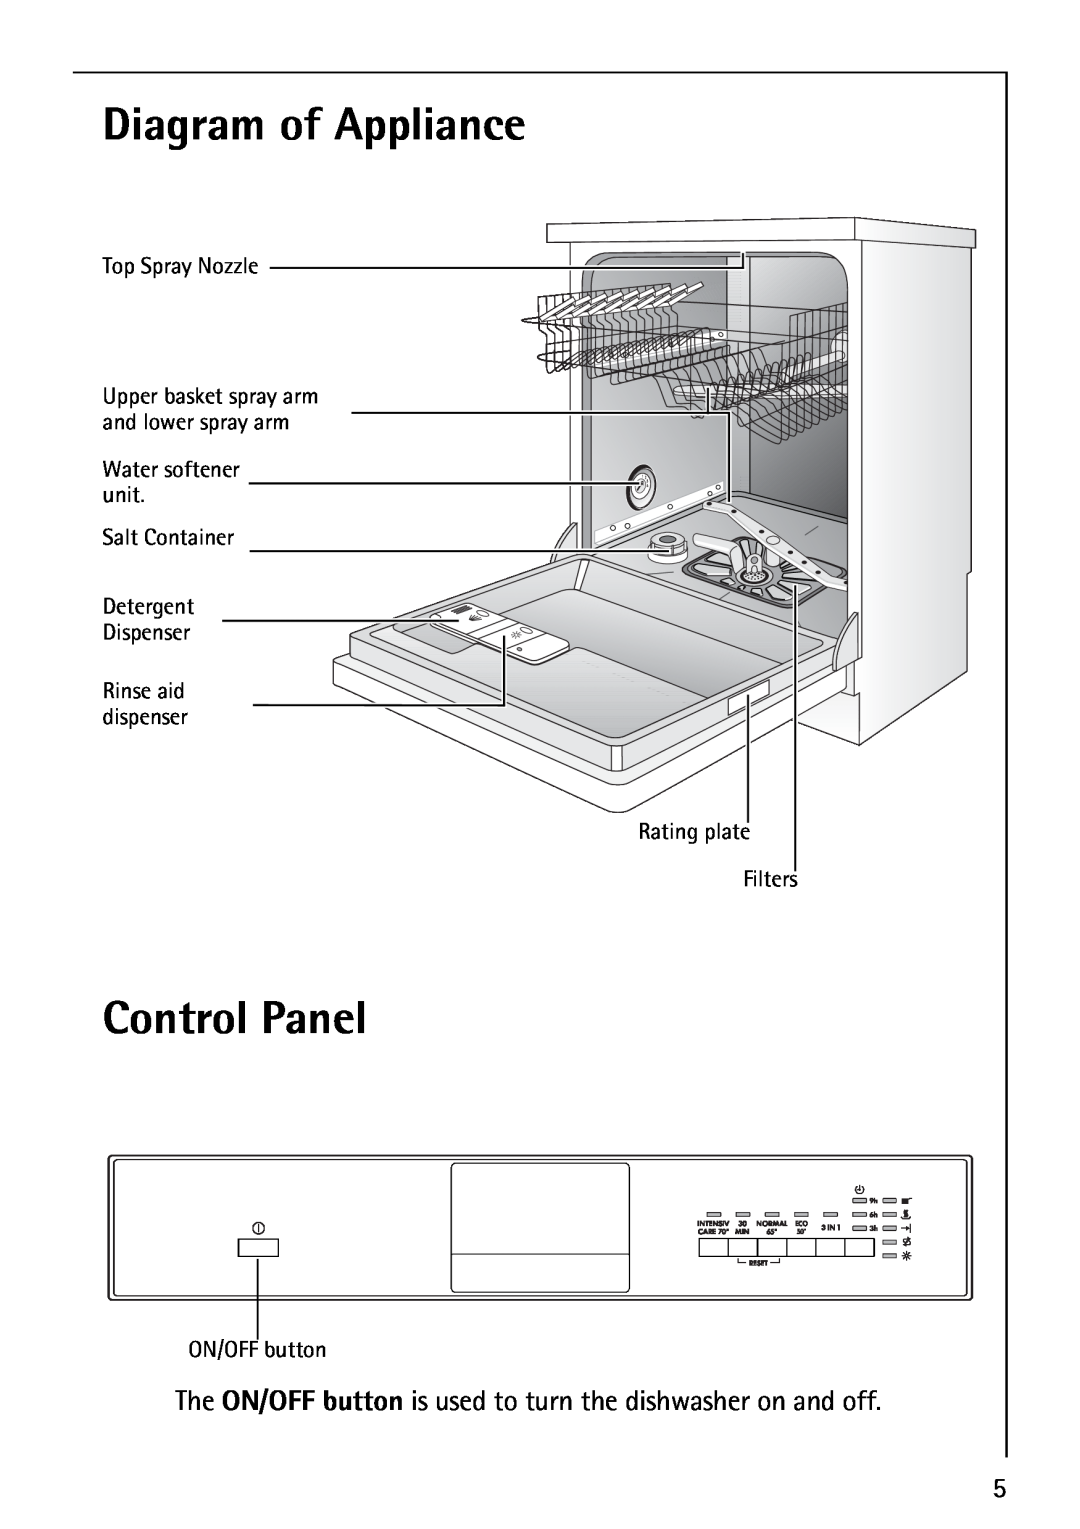 AEG 40660 manual Diagram of Appliance, Control Panel 